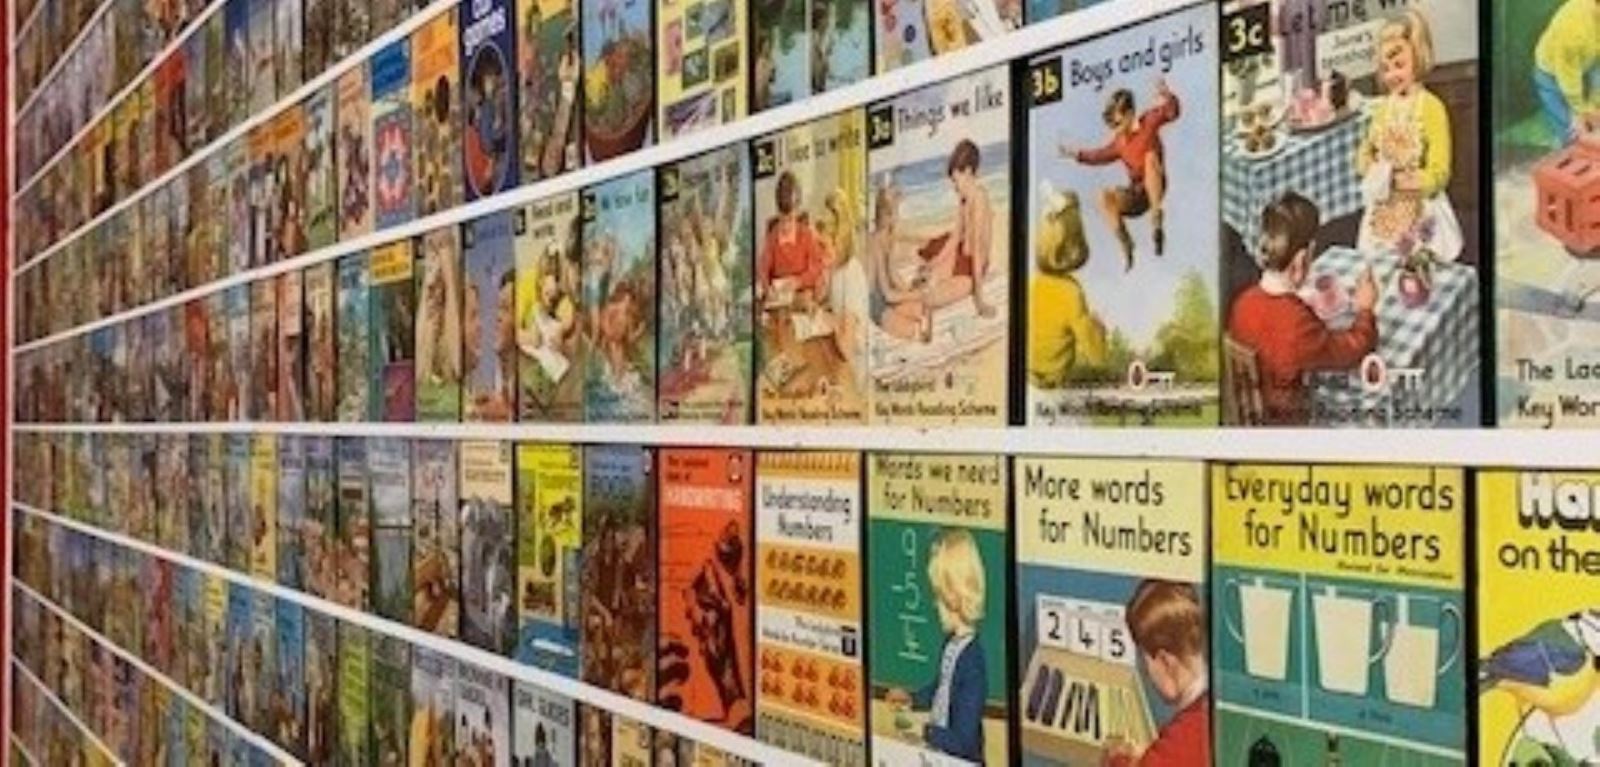 Wall display of Ladybird Books